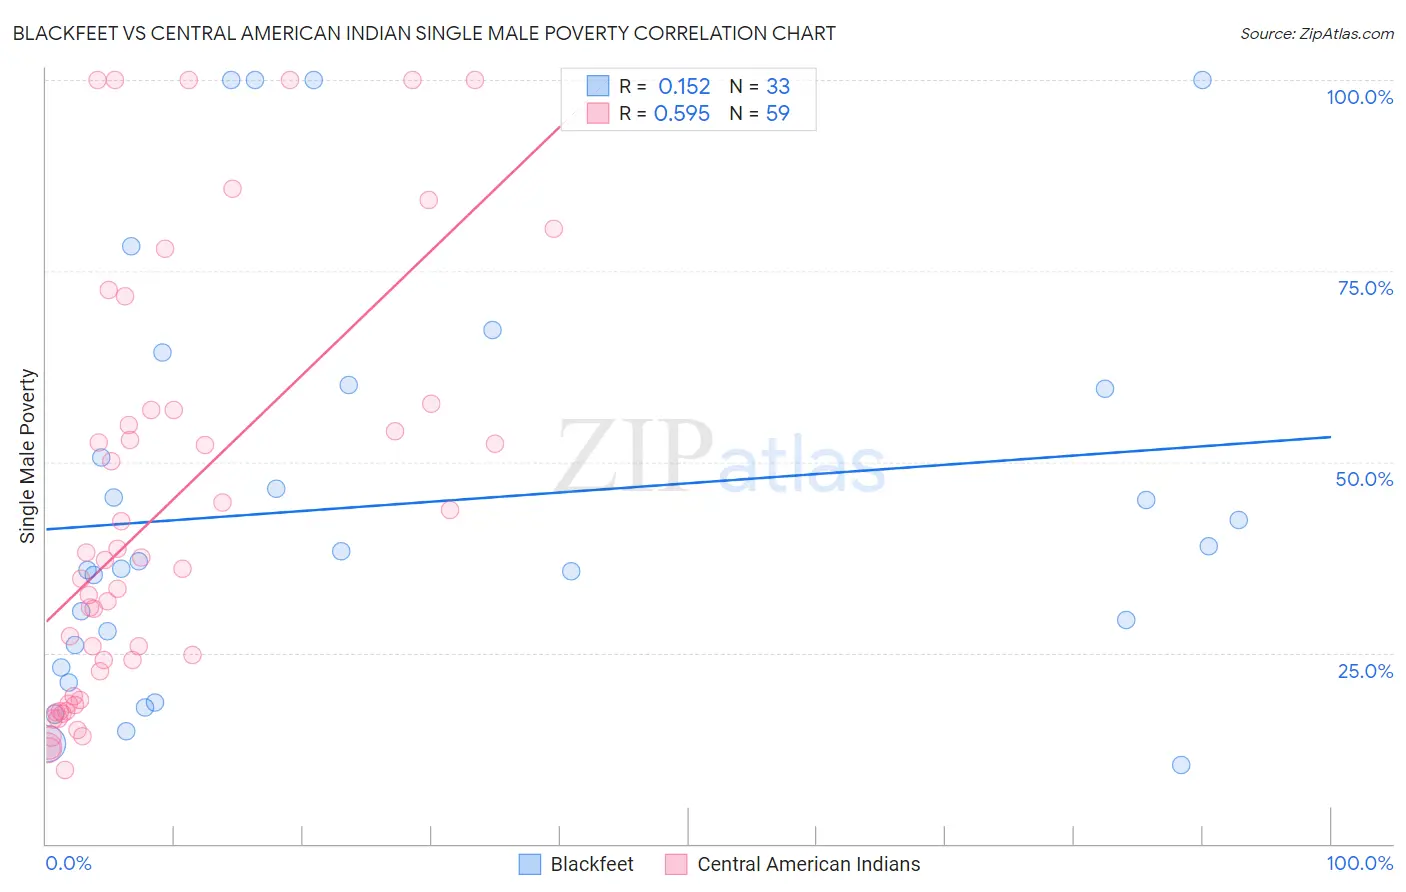 Blackfeet vs Central American Indian Single Male Poverty